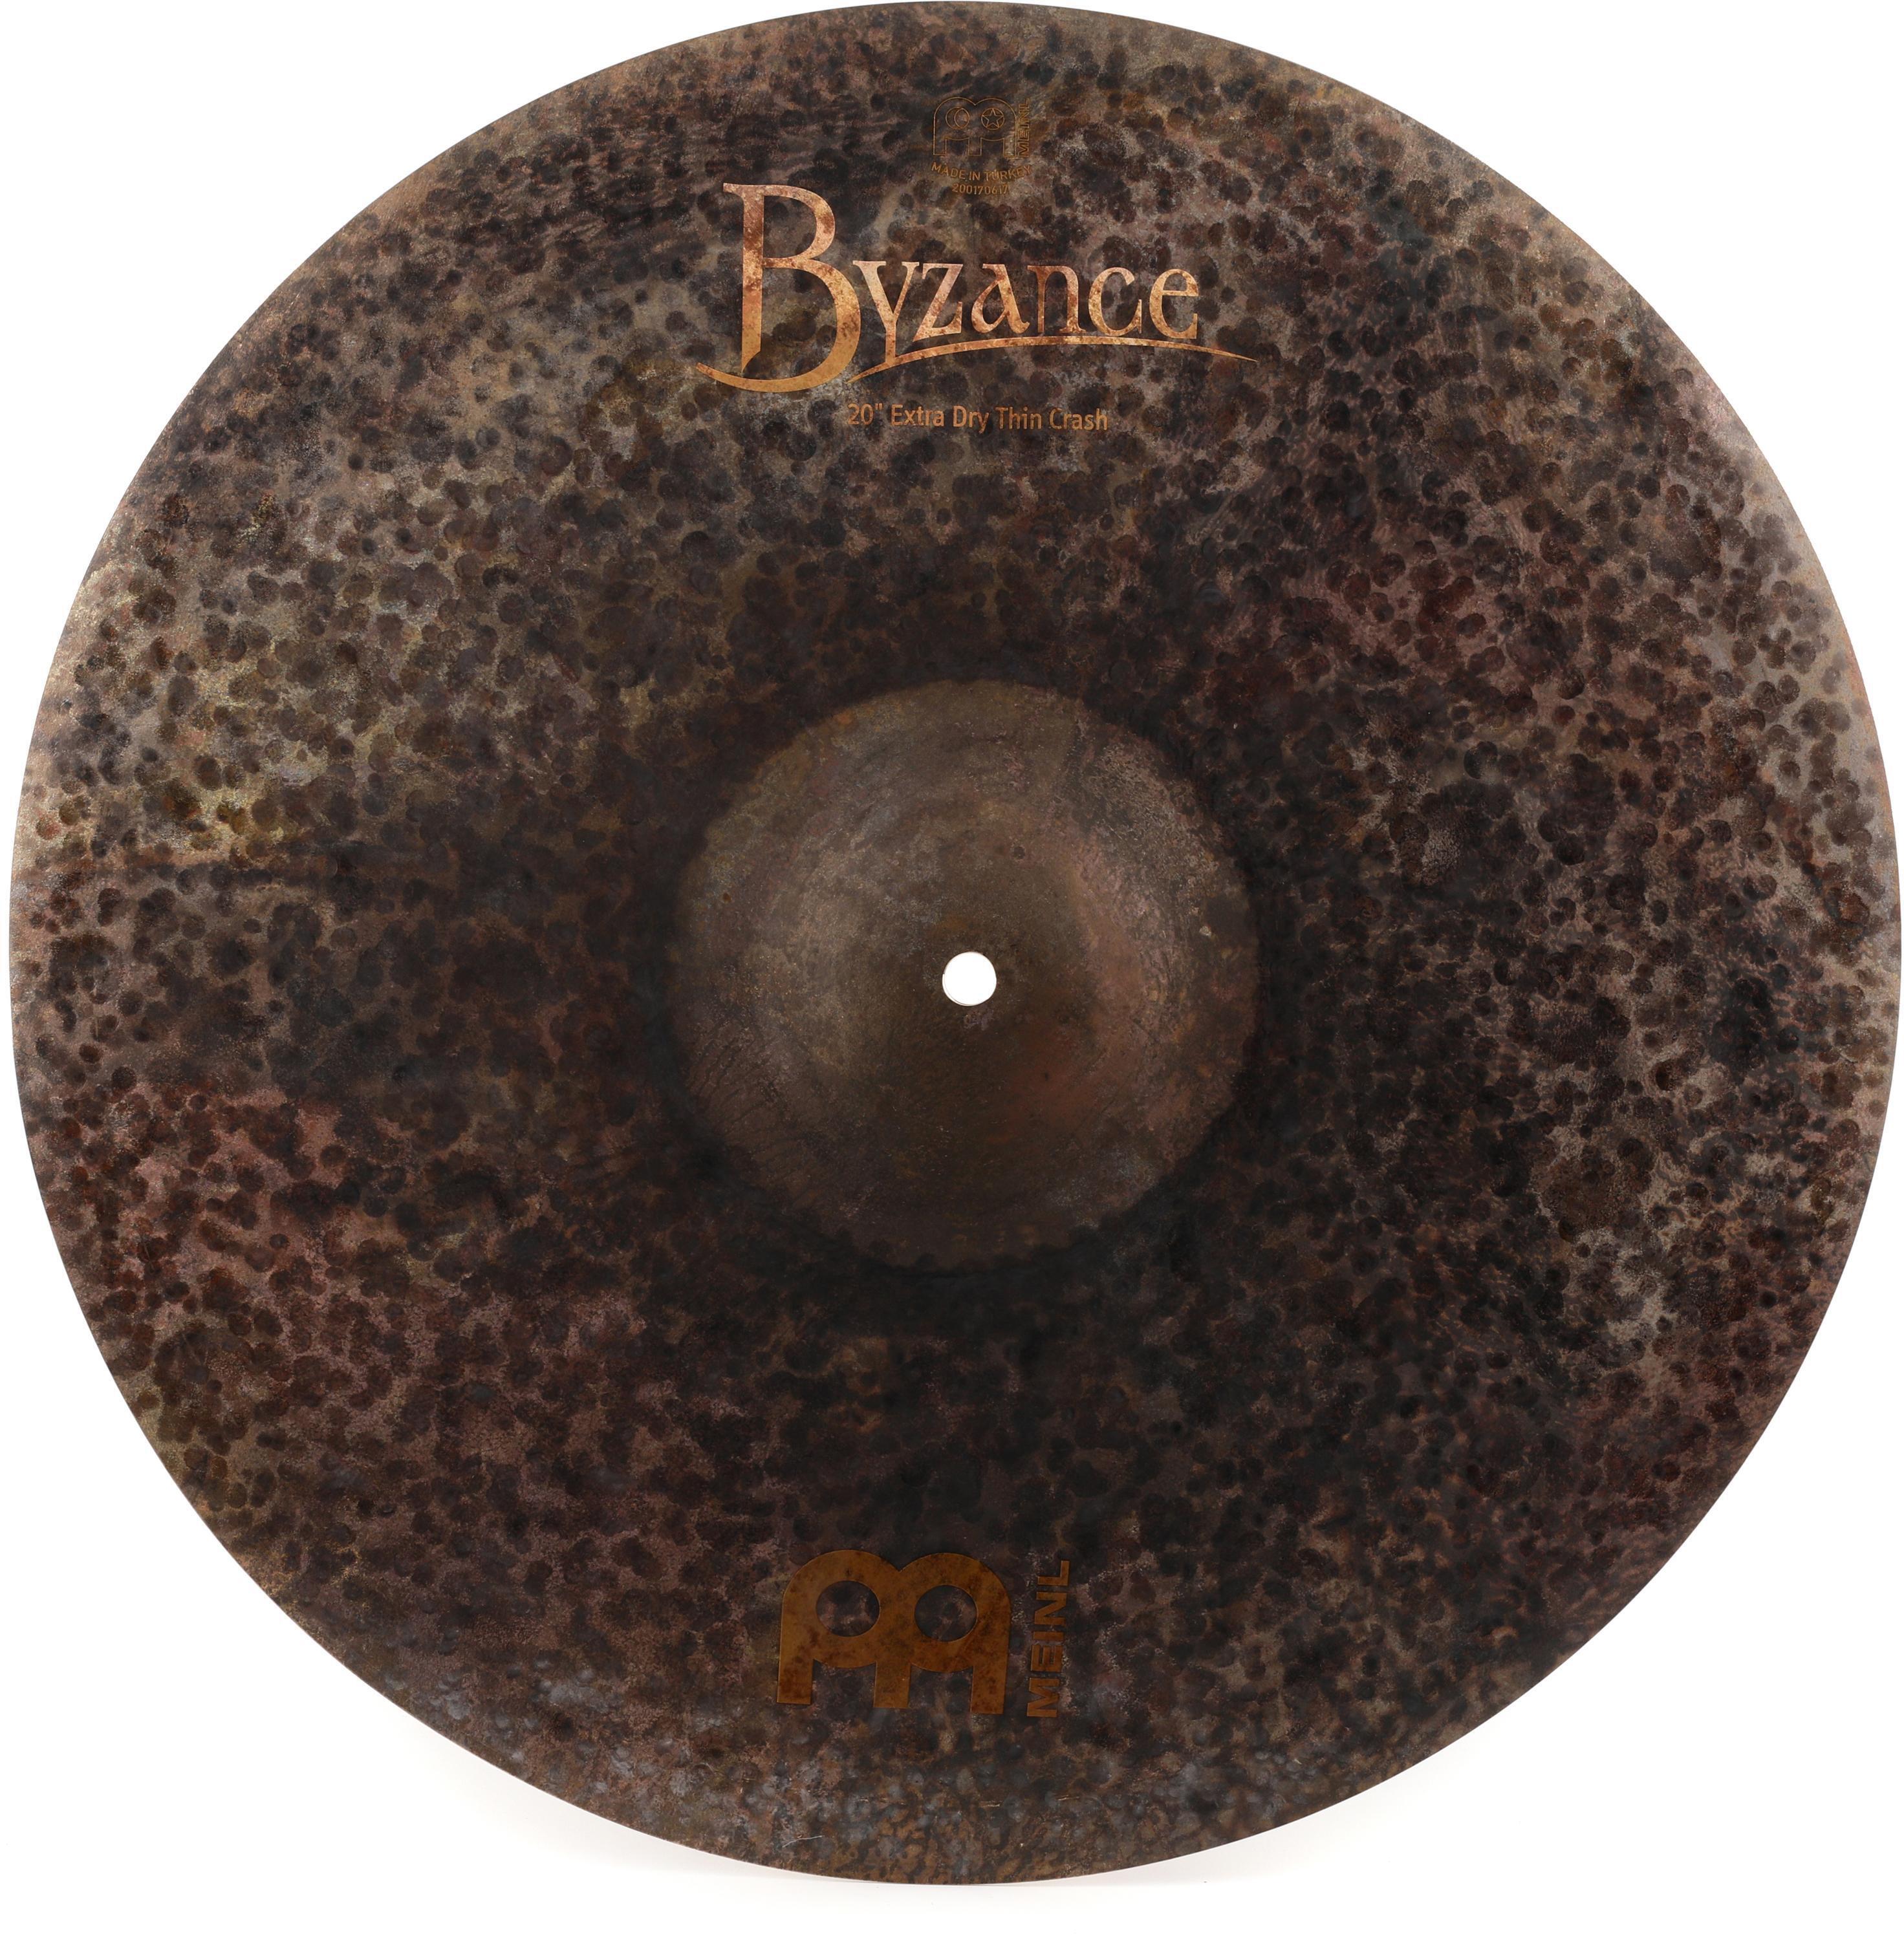 Bundled Item: Meinl Cymbals 20 inch Byzance Extra Dry Thin Crash Cymbal